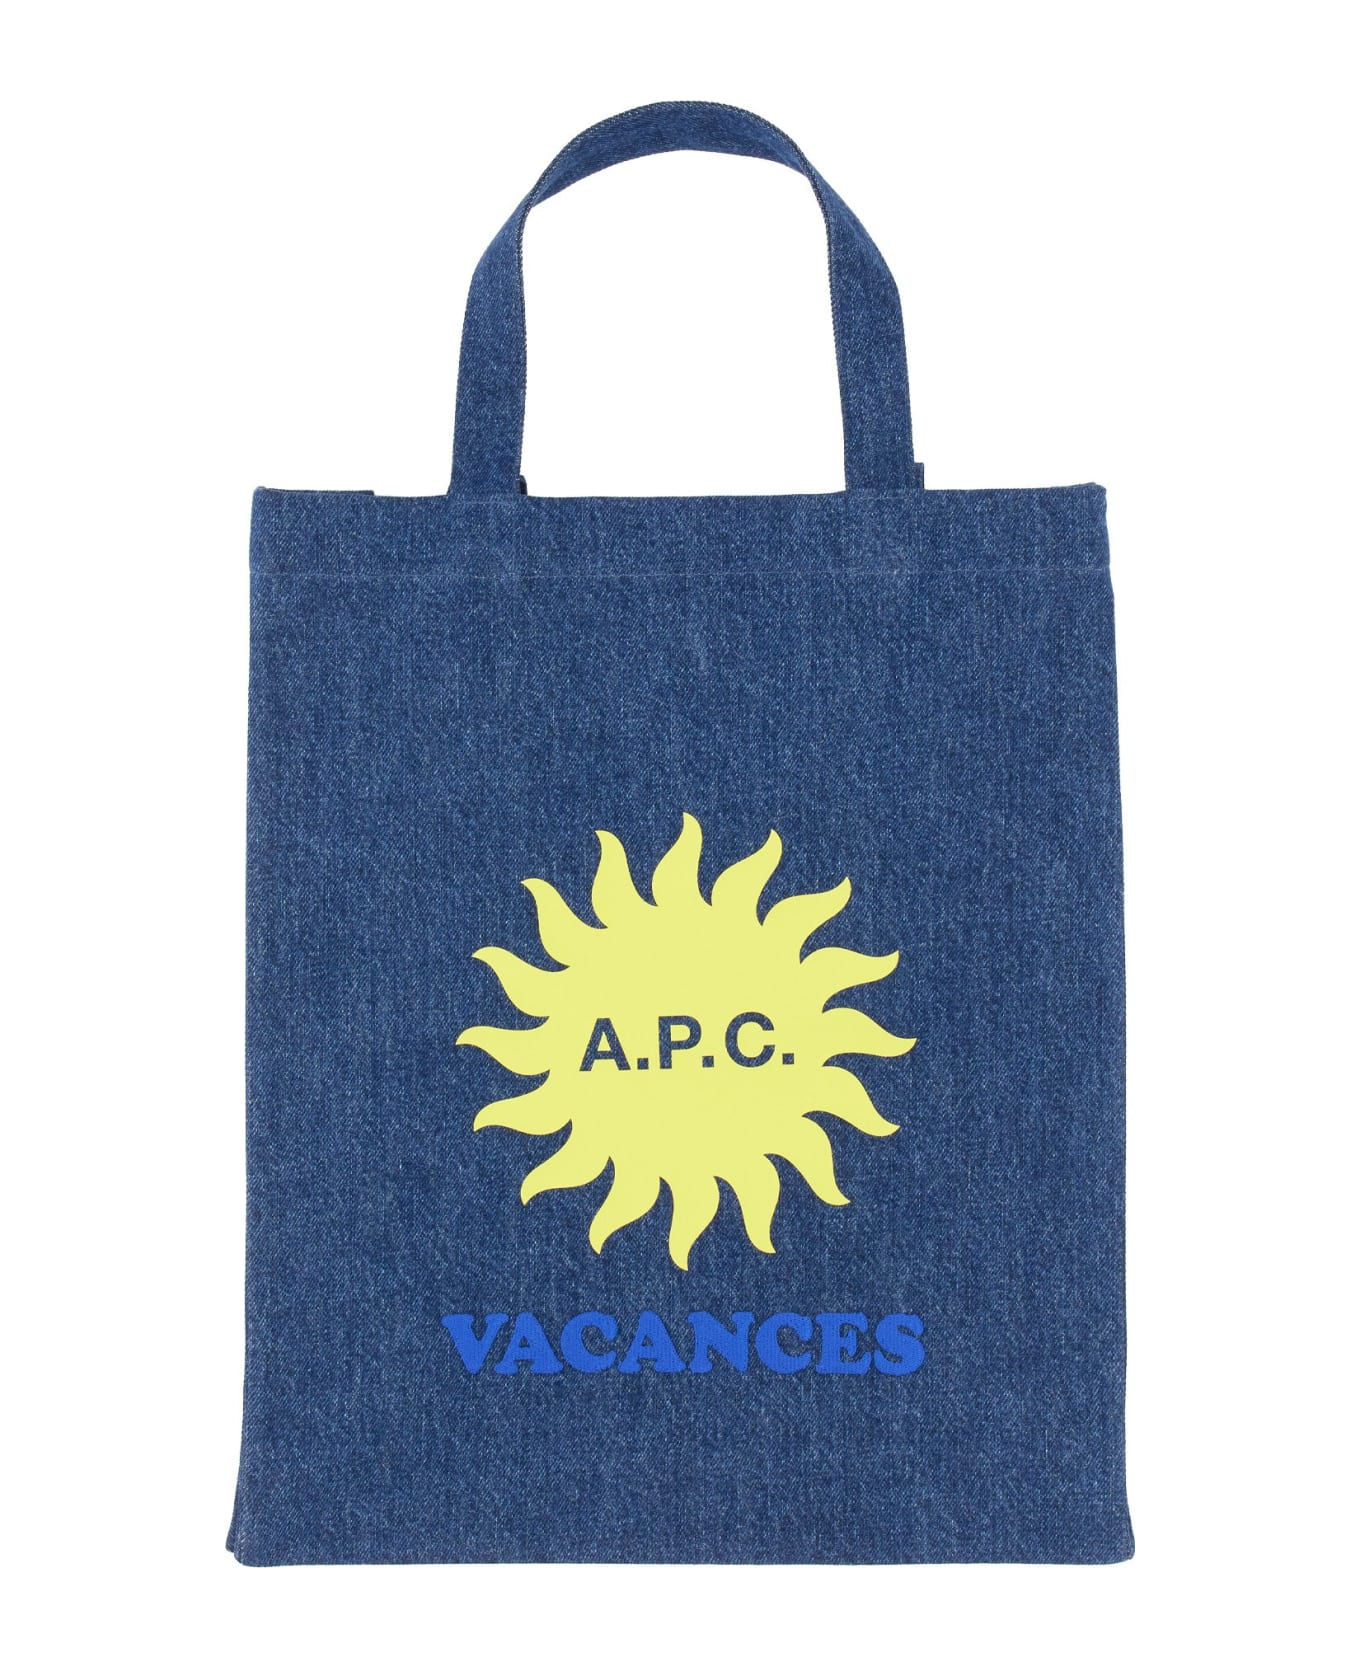 A.P.C. Denim Tote Bag With Print - BLU トートバッグ